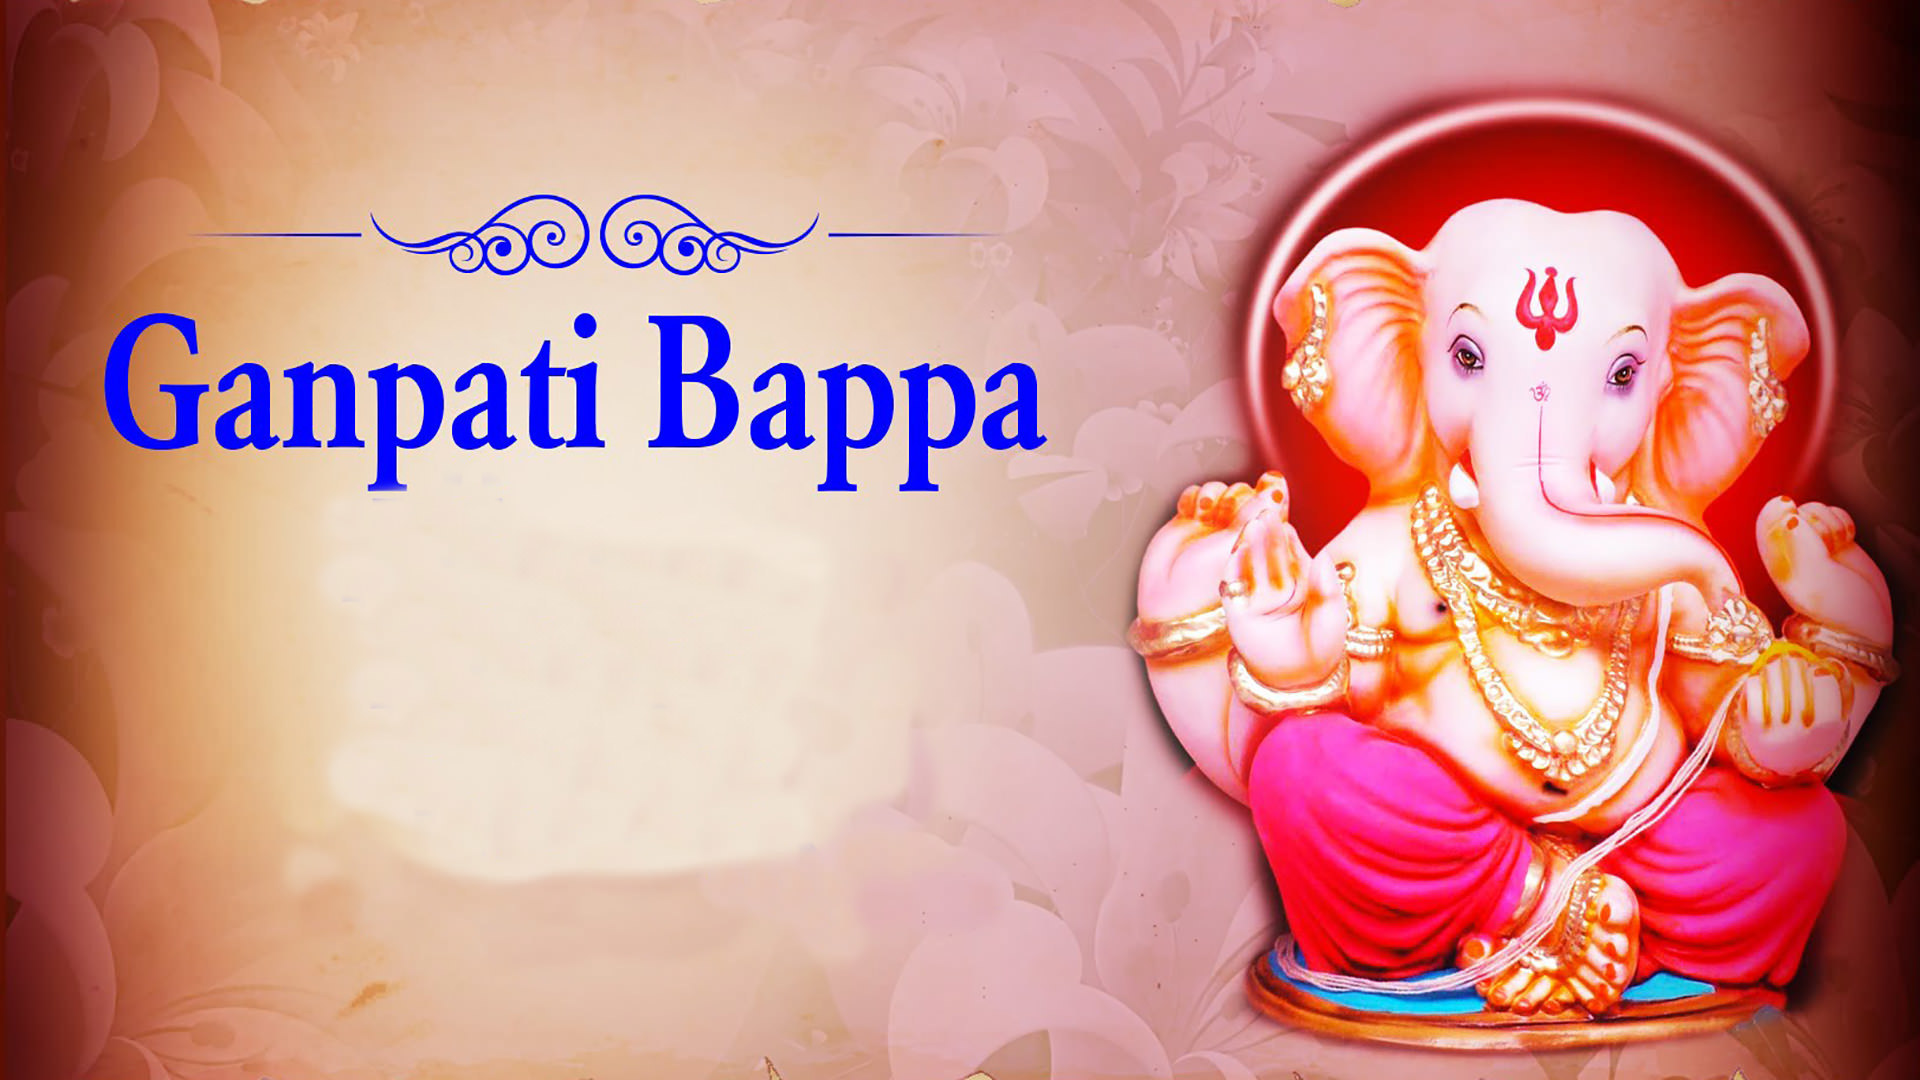 Ganpati Bappa Morya Short Status & Text